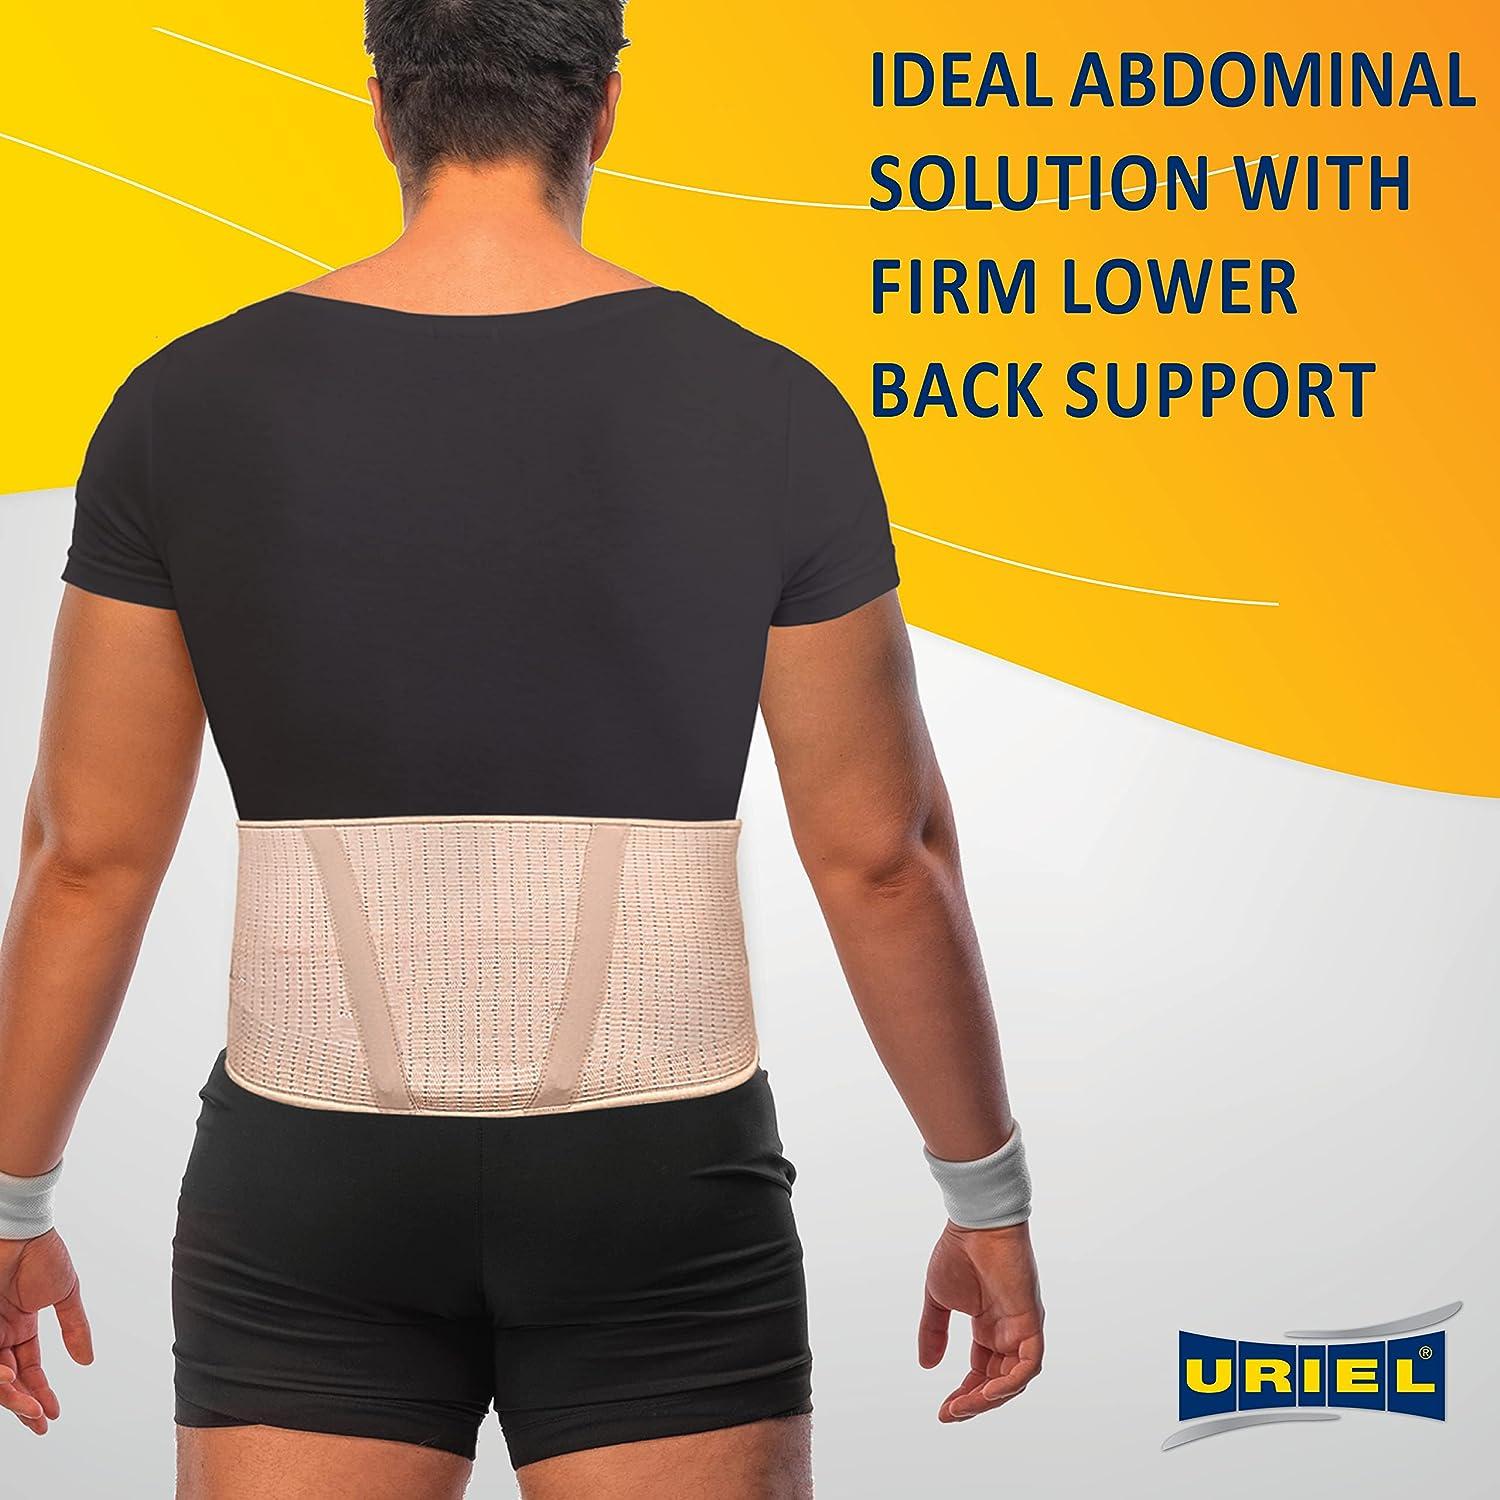 URIEL Abdominal Belt for Hanging Belly, Weak Abdominal and Lower